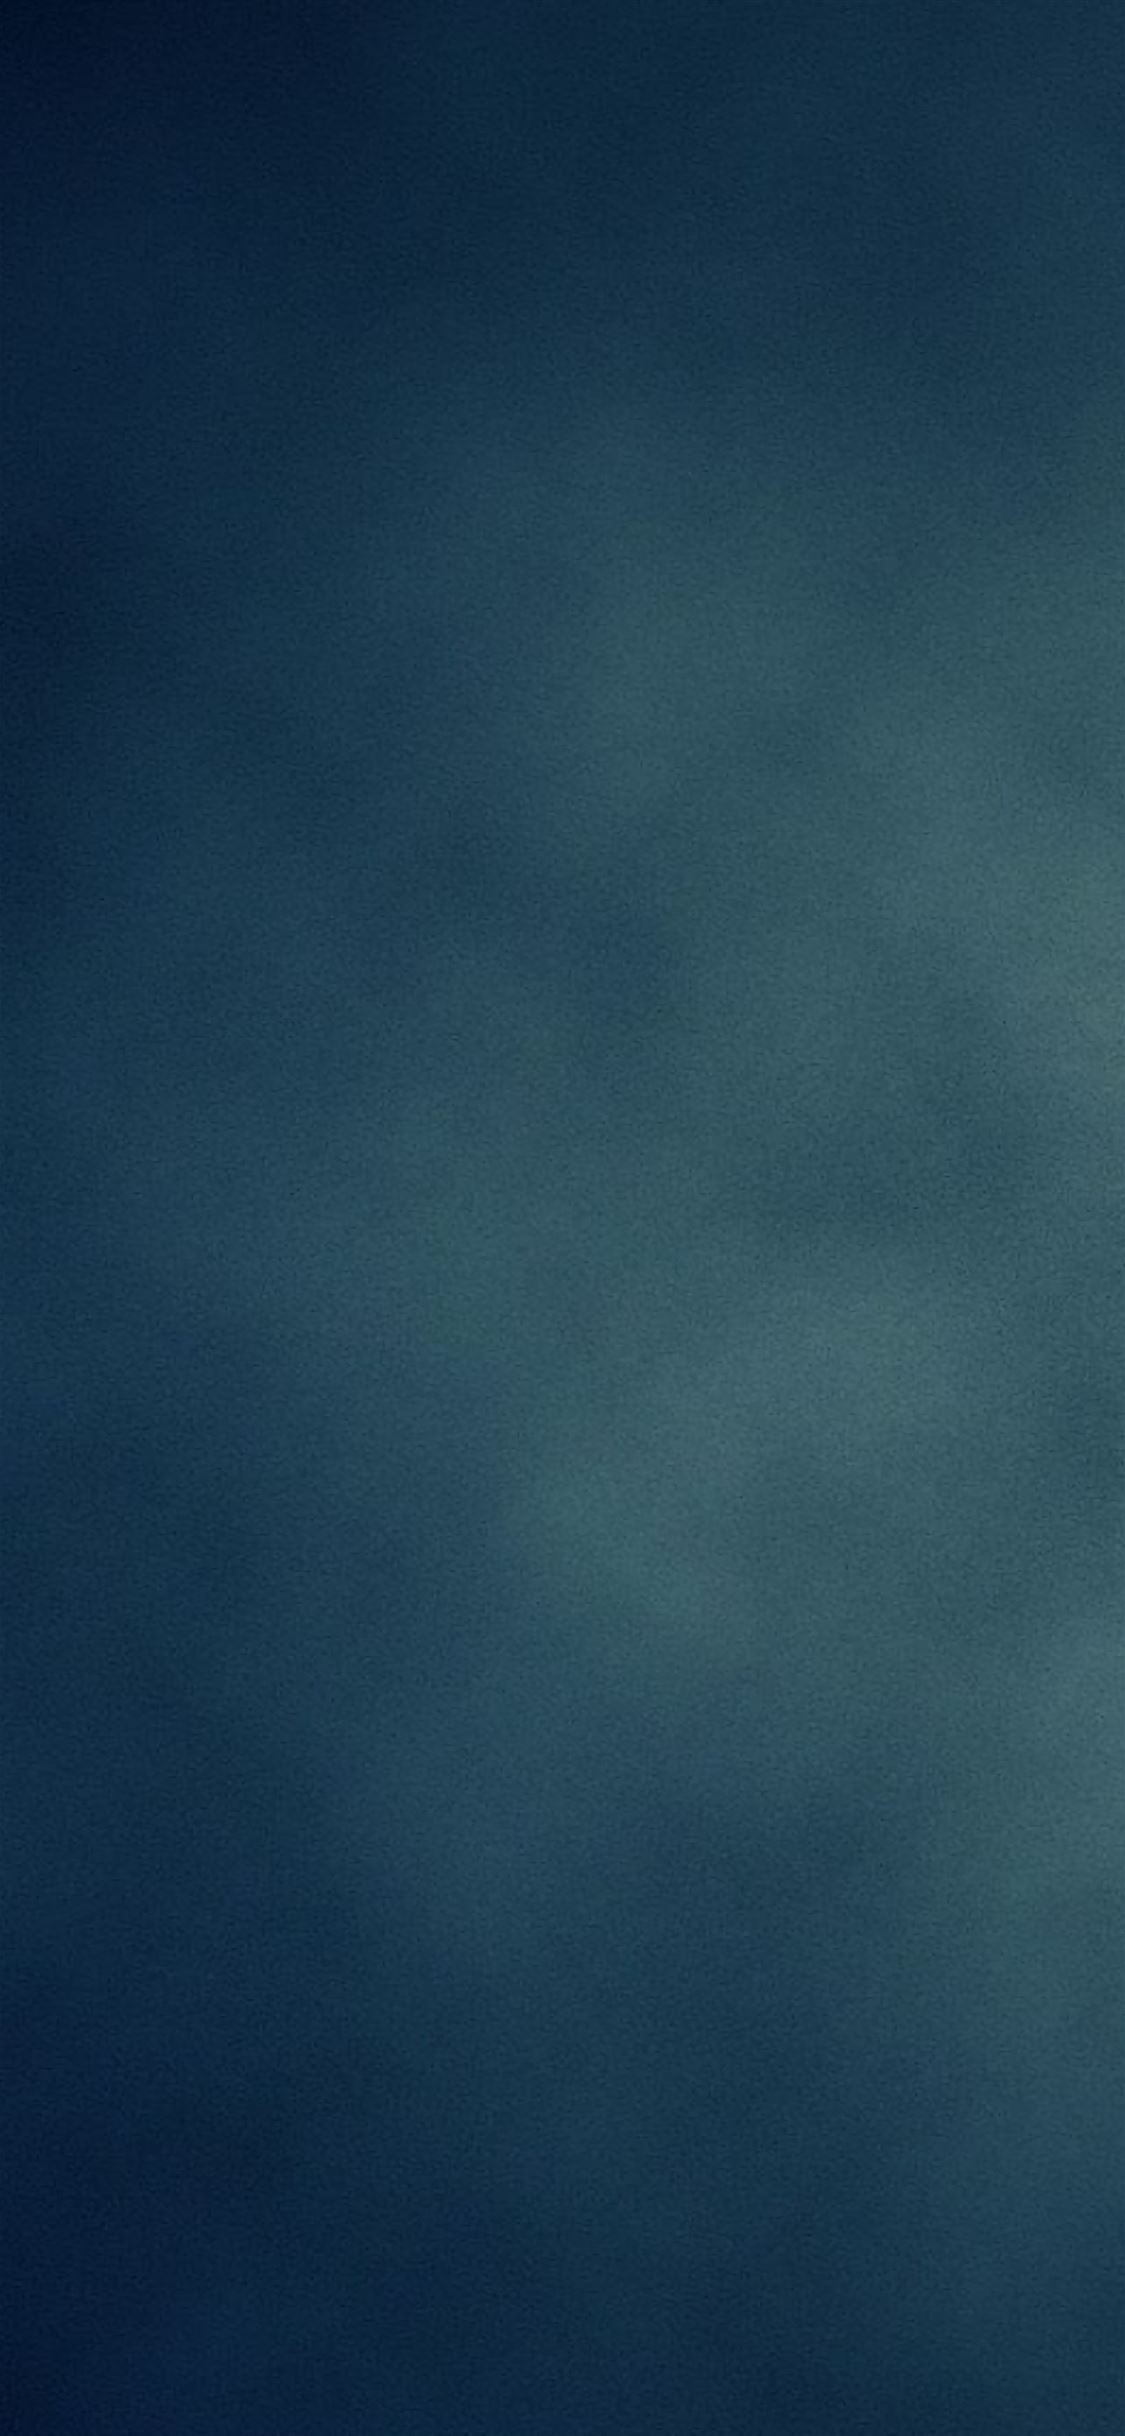 Blue Grunge Texture Abstract iPhone wallpaper 